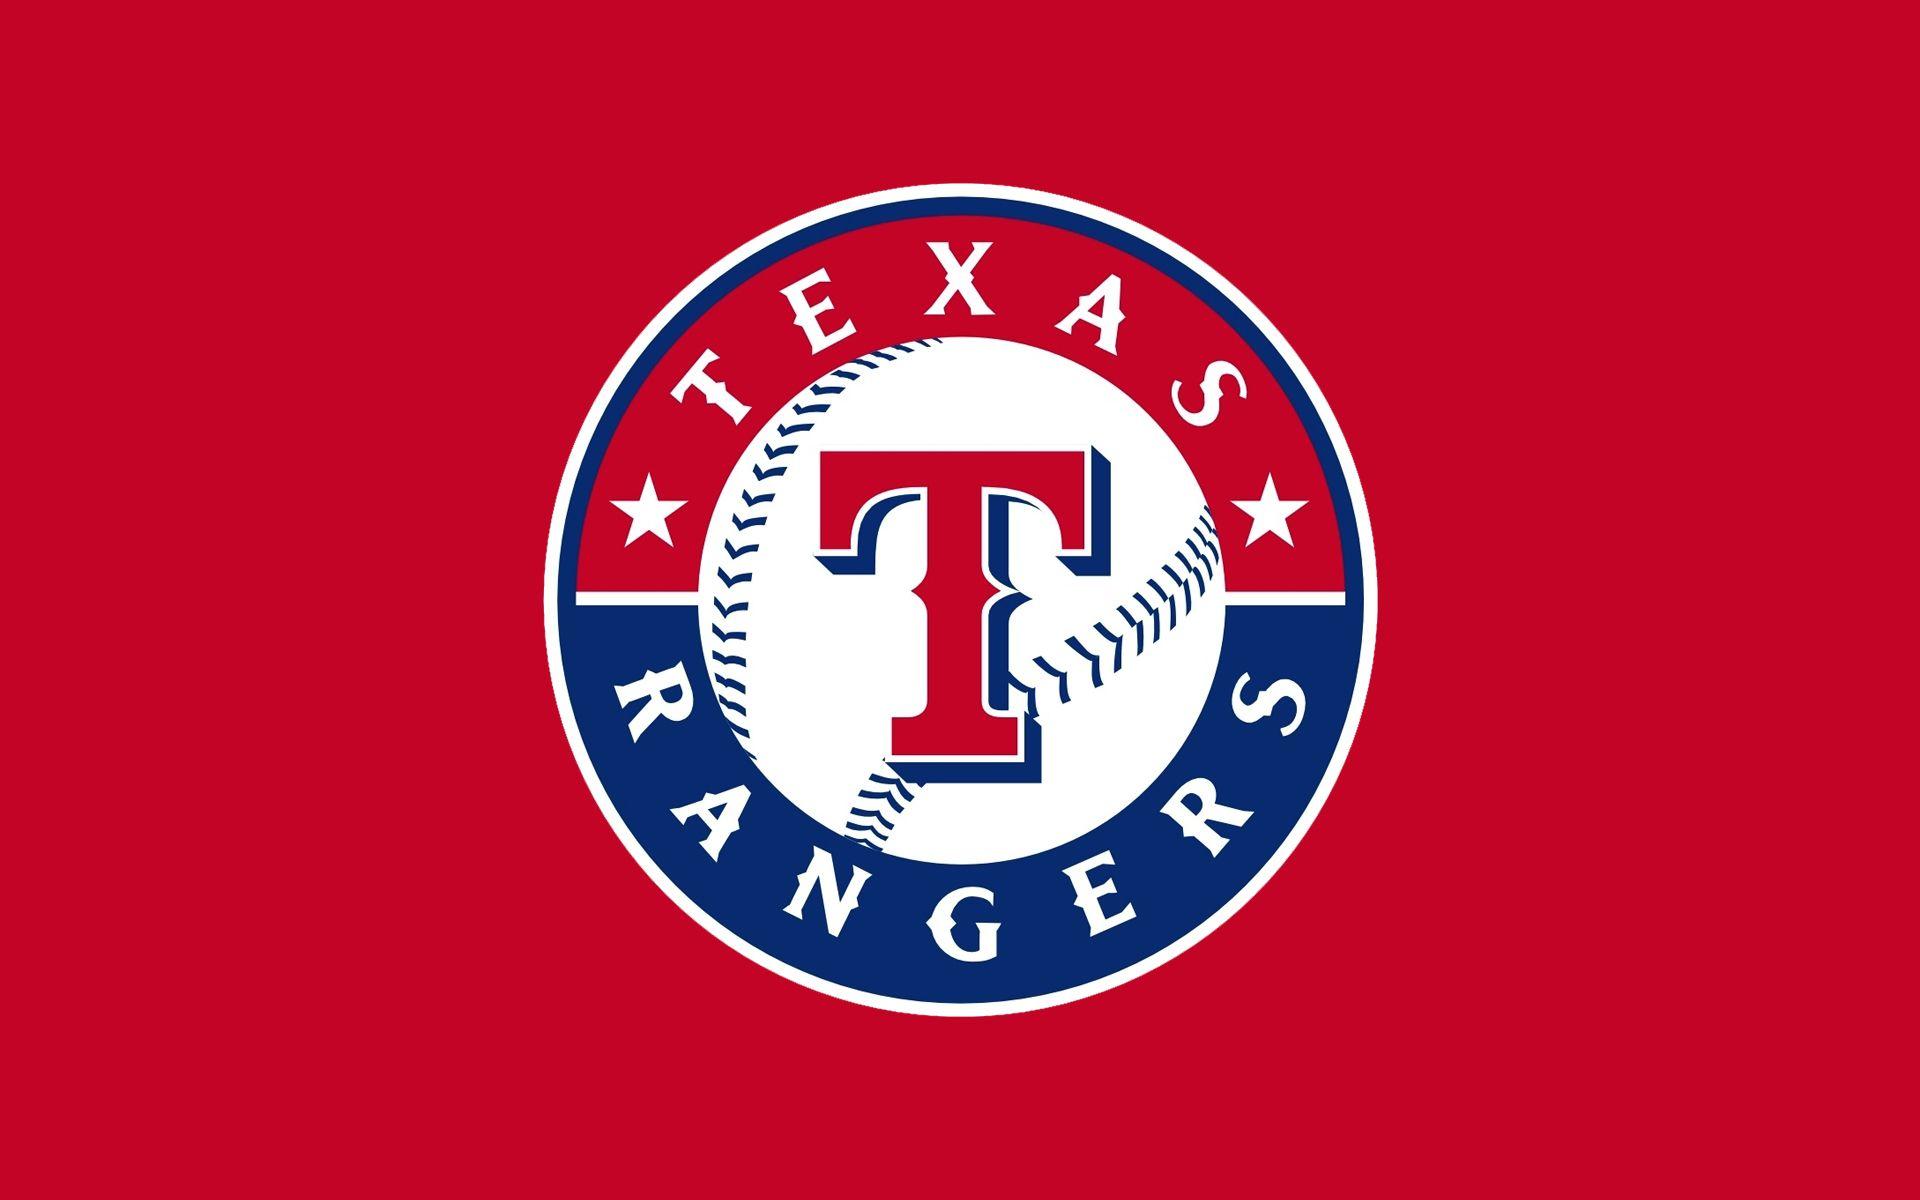 Texas Rangers to Present Grant to McKinney Little League Baseball